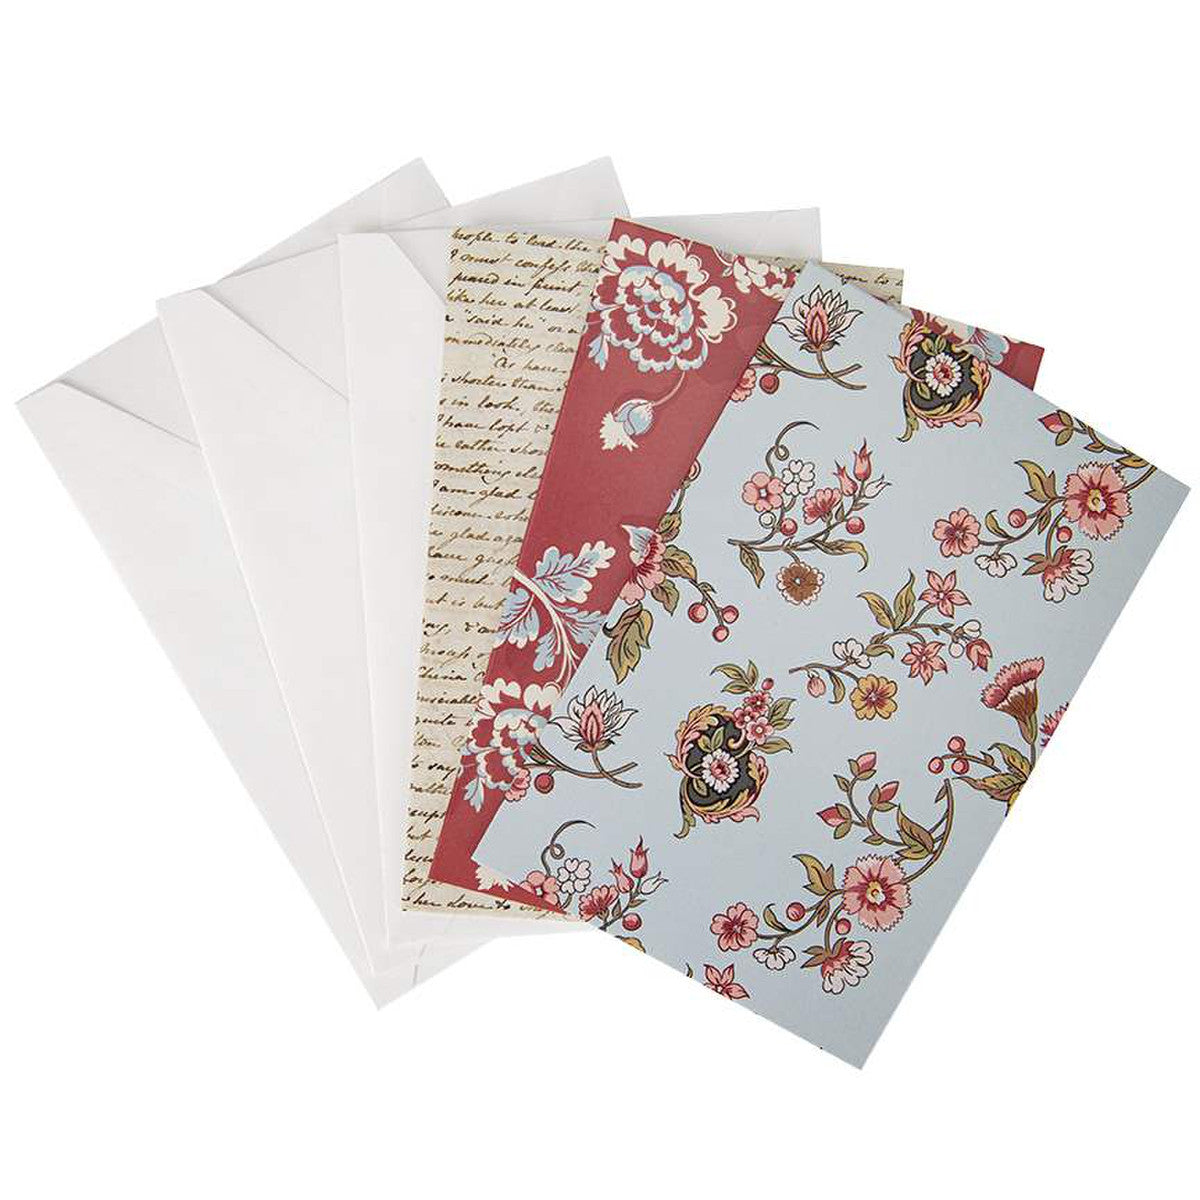 Greeting Cards & Envelopes, Blank Jane Austen Note Cards - Set of 12